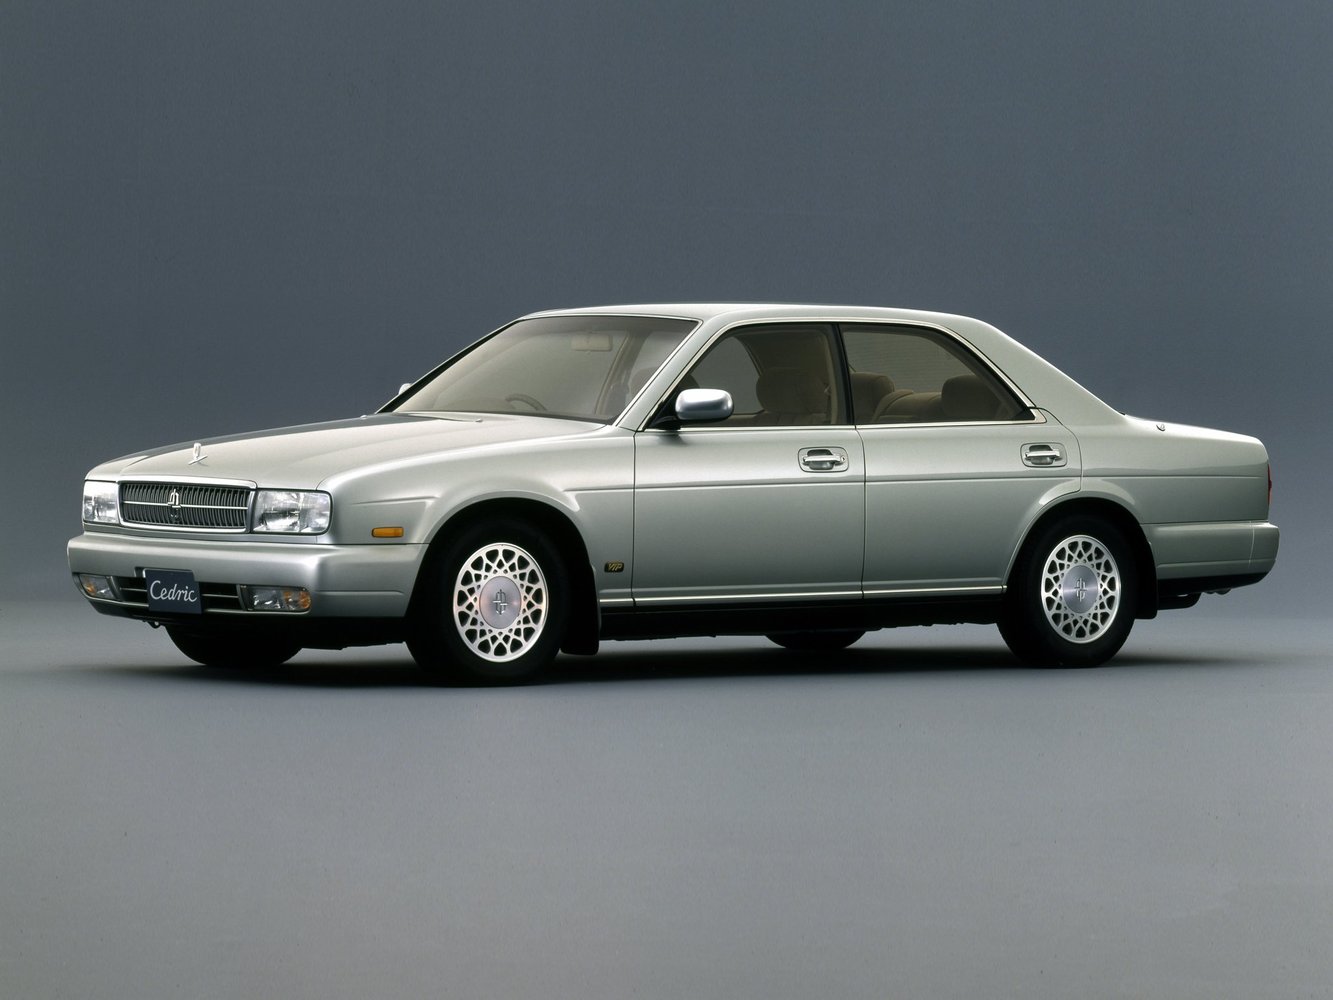 Nissan Cedric 1991 - 1995